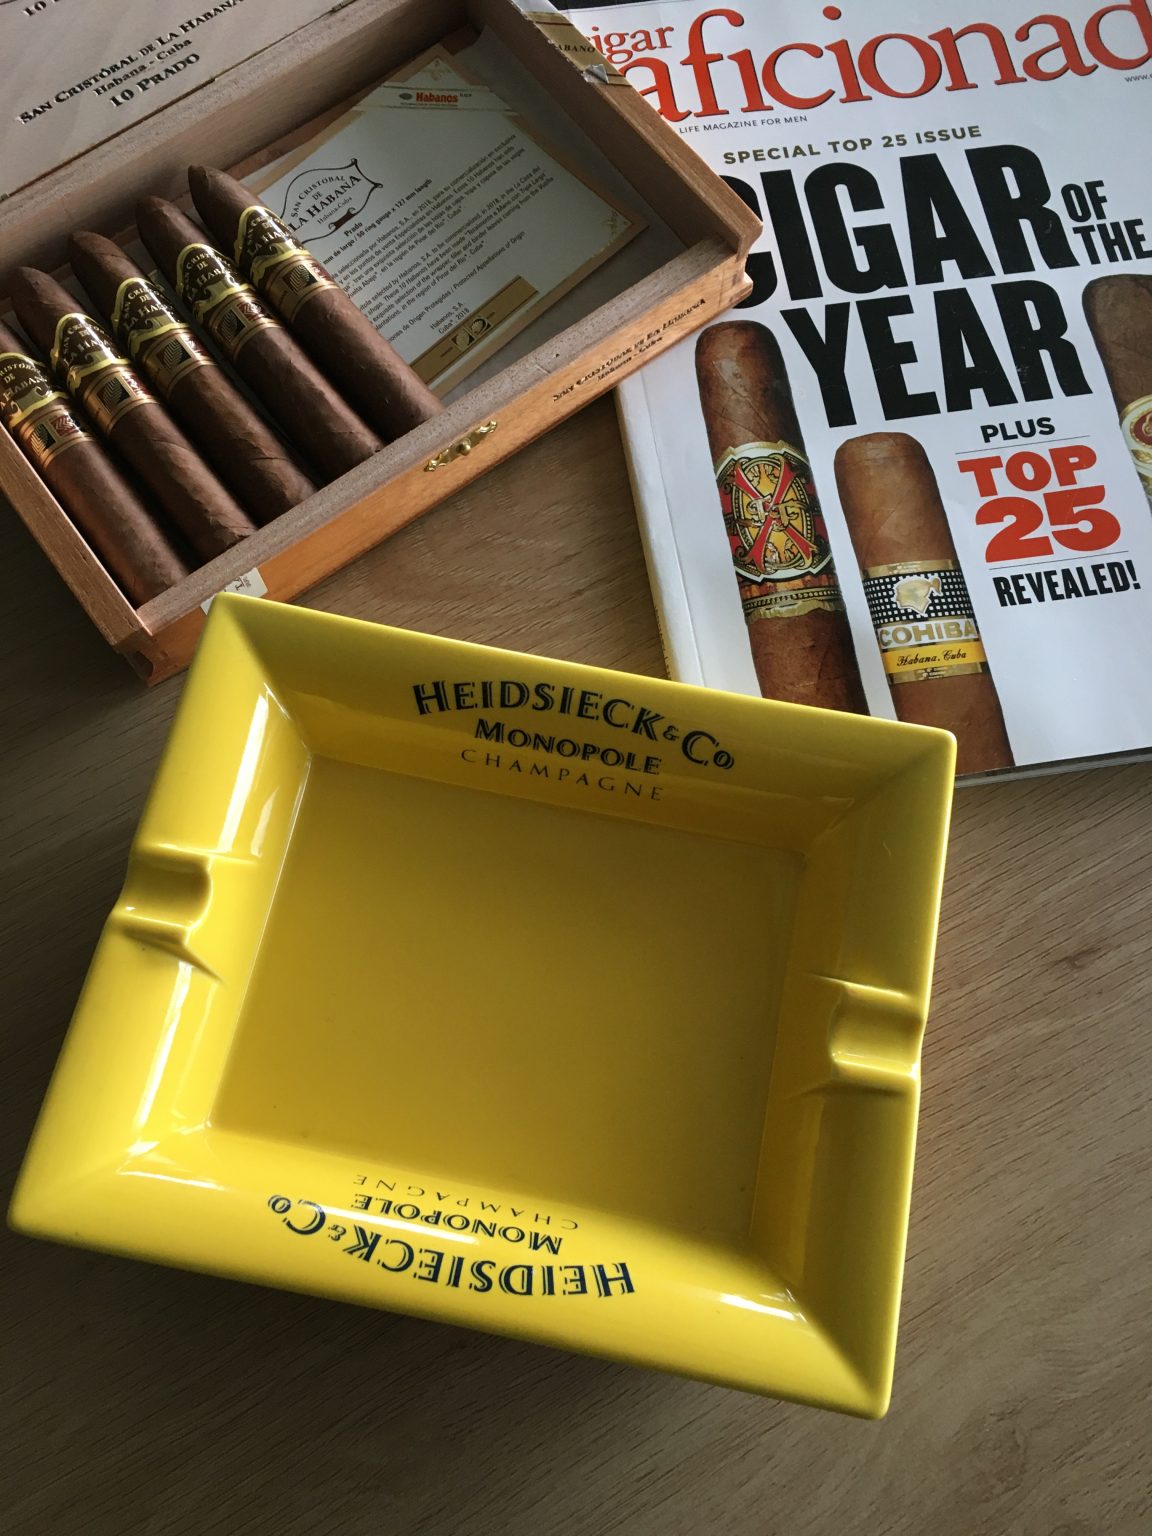 heidsieck-monopole-cigar-ashtray-for-sale-elado-szivarhamu-tarto-champagneclub-3-1152x1536.jpg